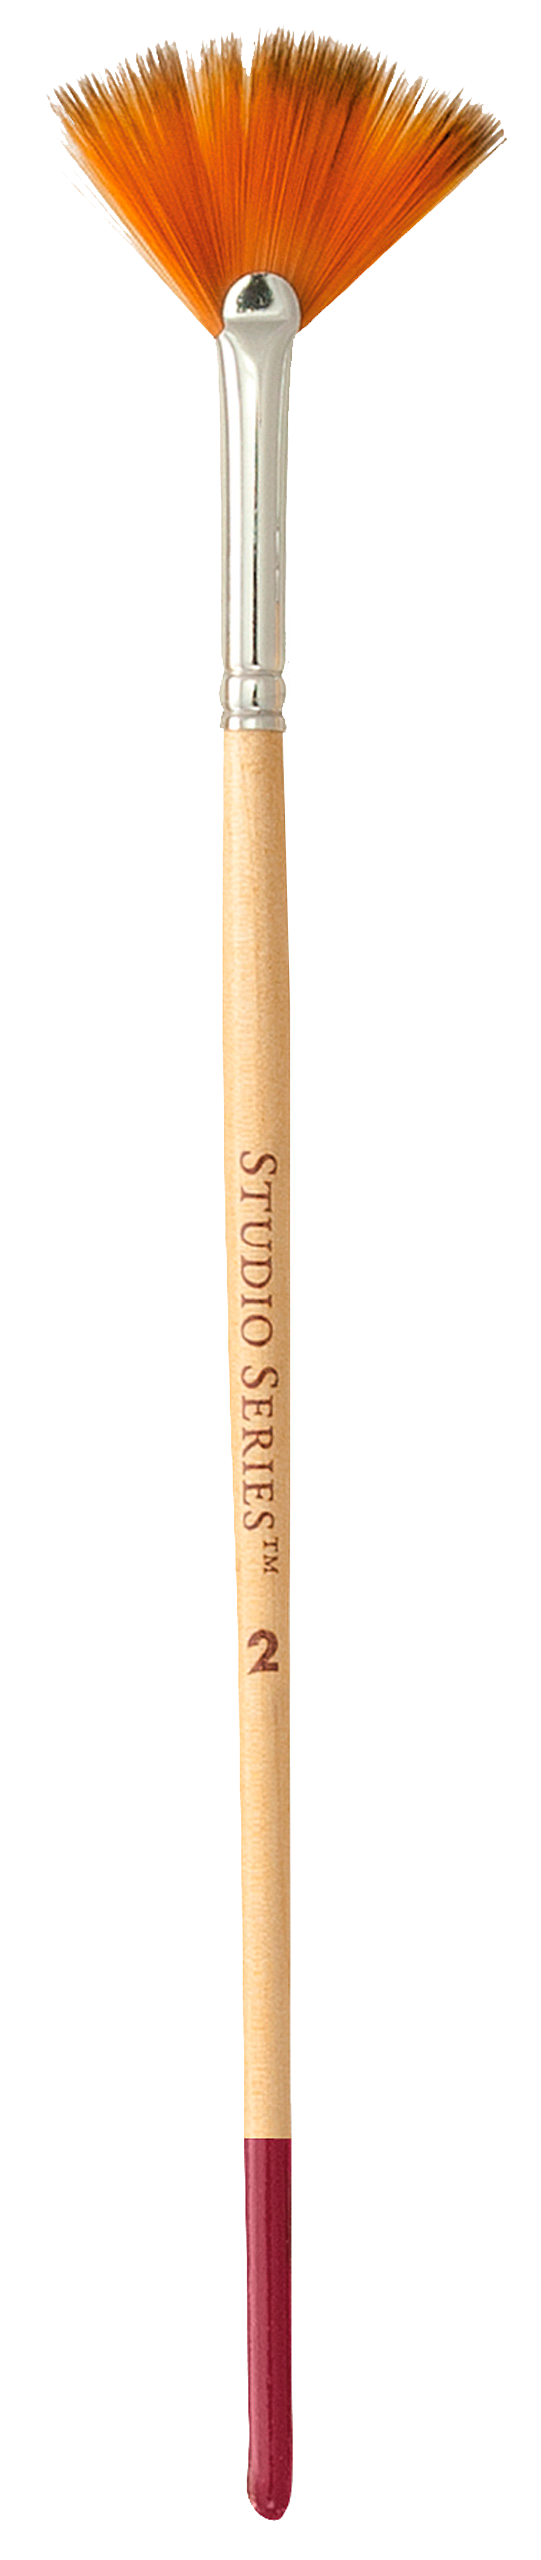 Studio Series Artist's Brush Set: 12 Professional-Quality Brushes